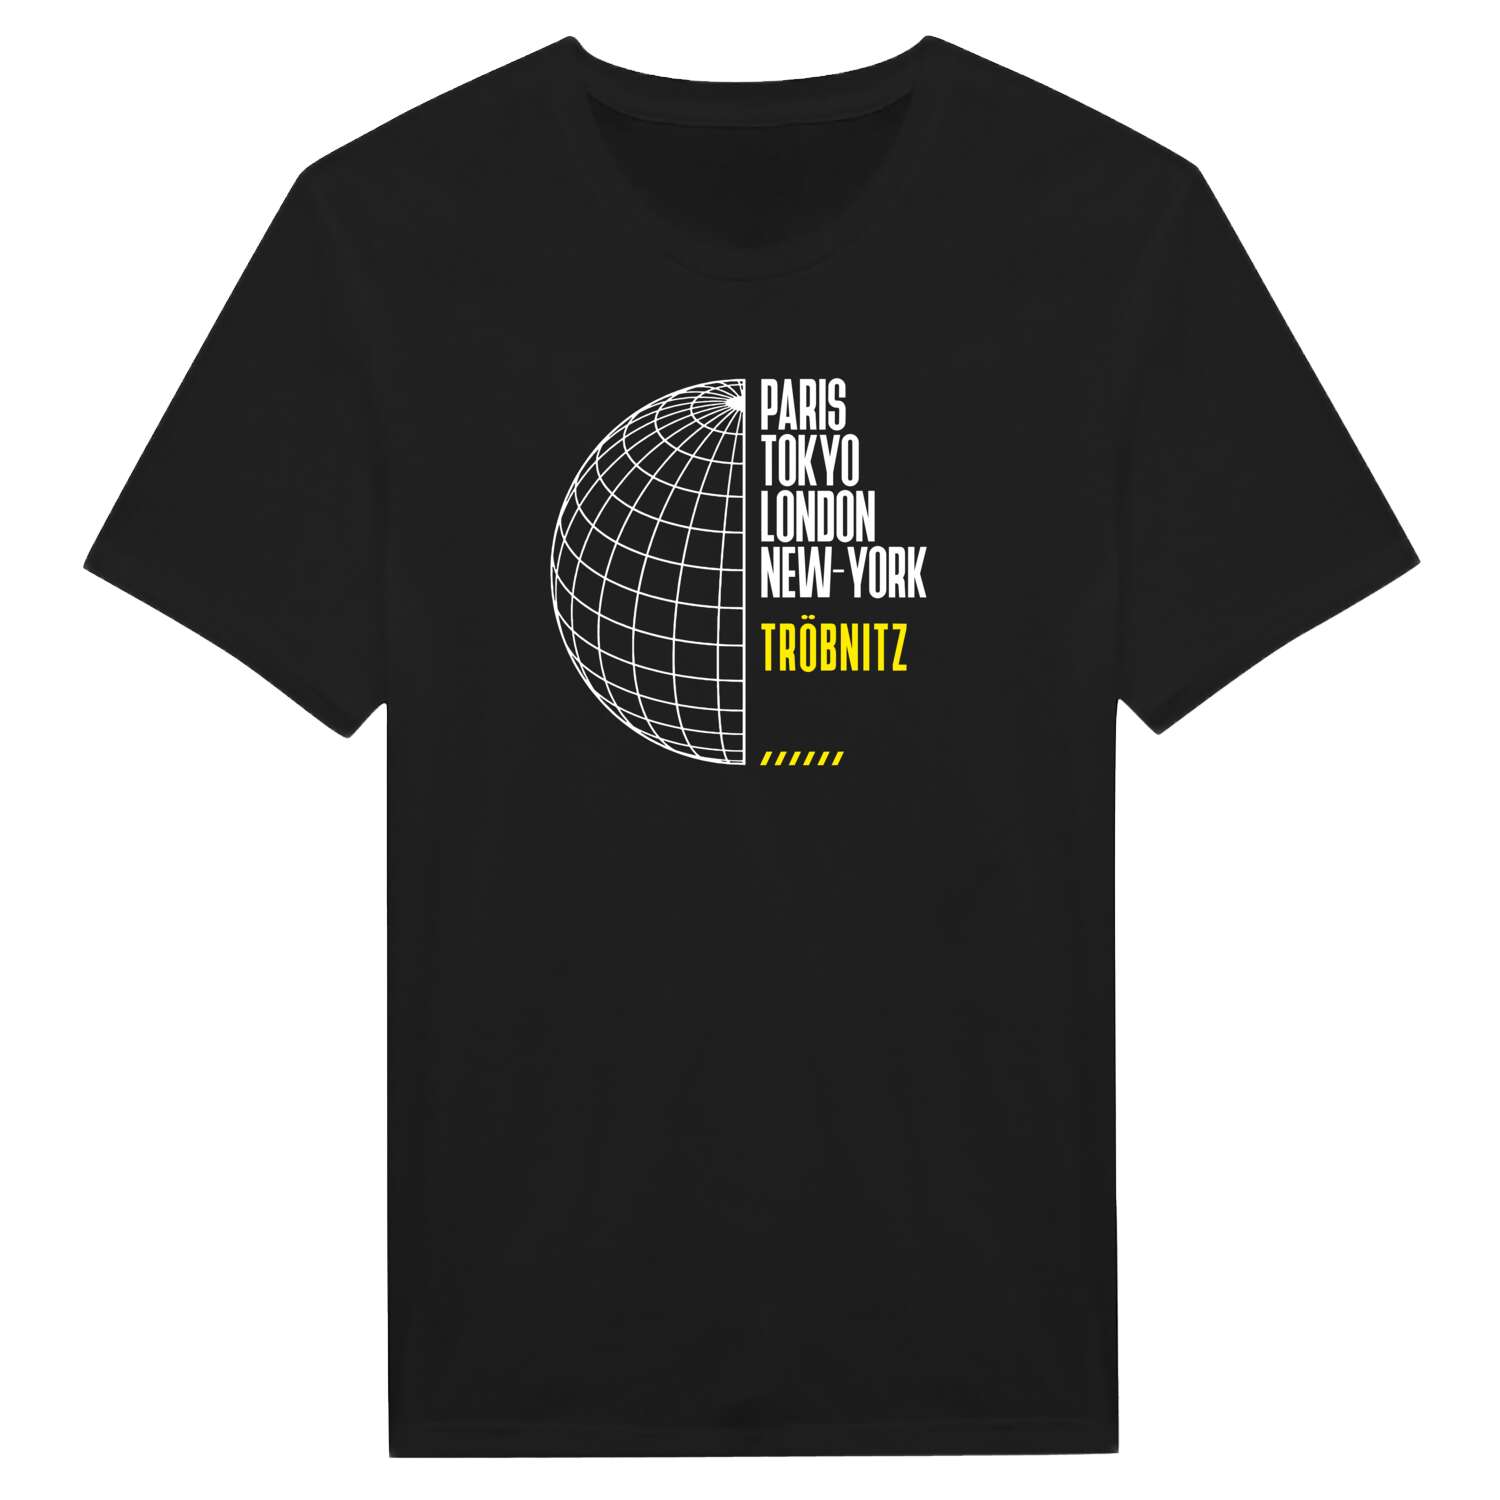 Tröbnitz T-Shirt »Paris Tokyo London«